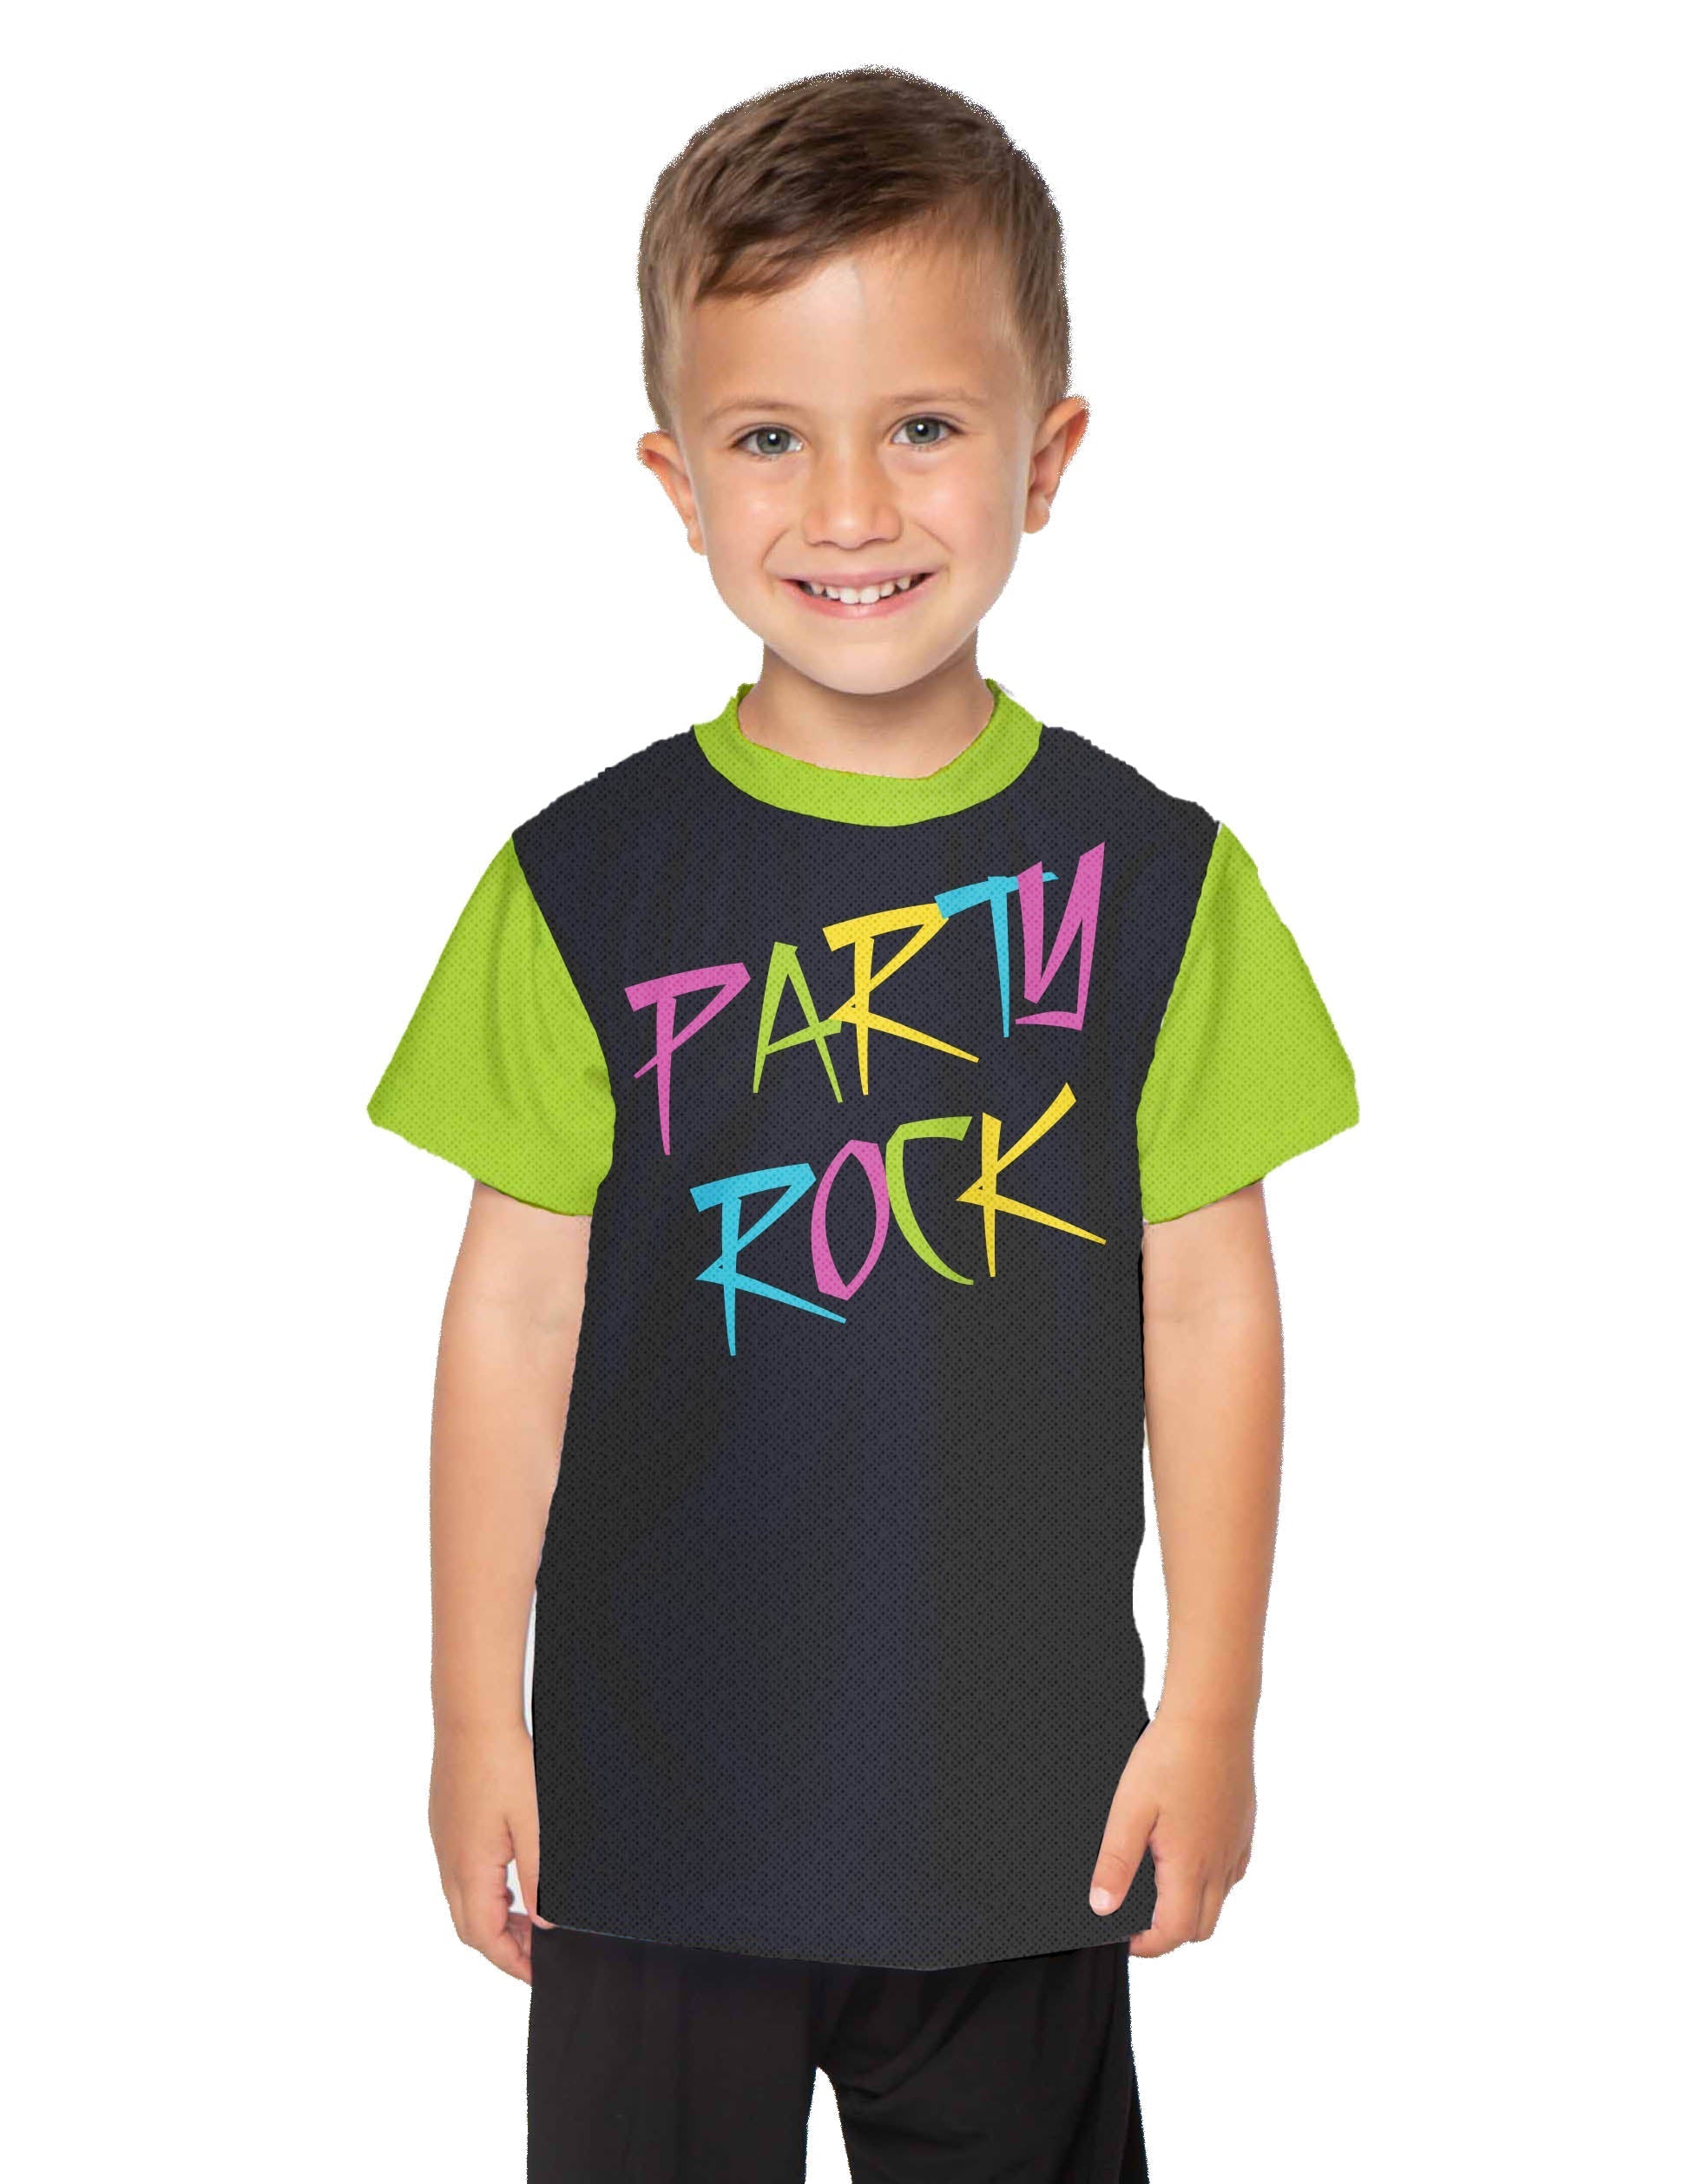 Party Rock T-Shirt